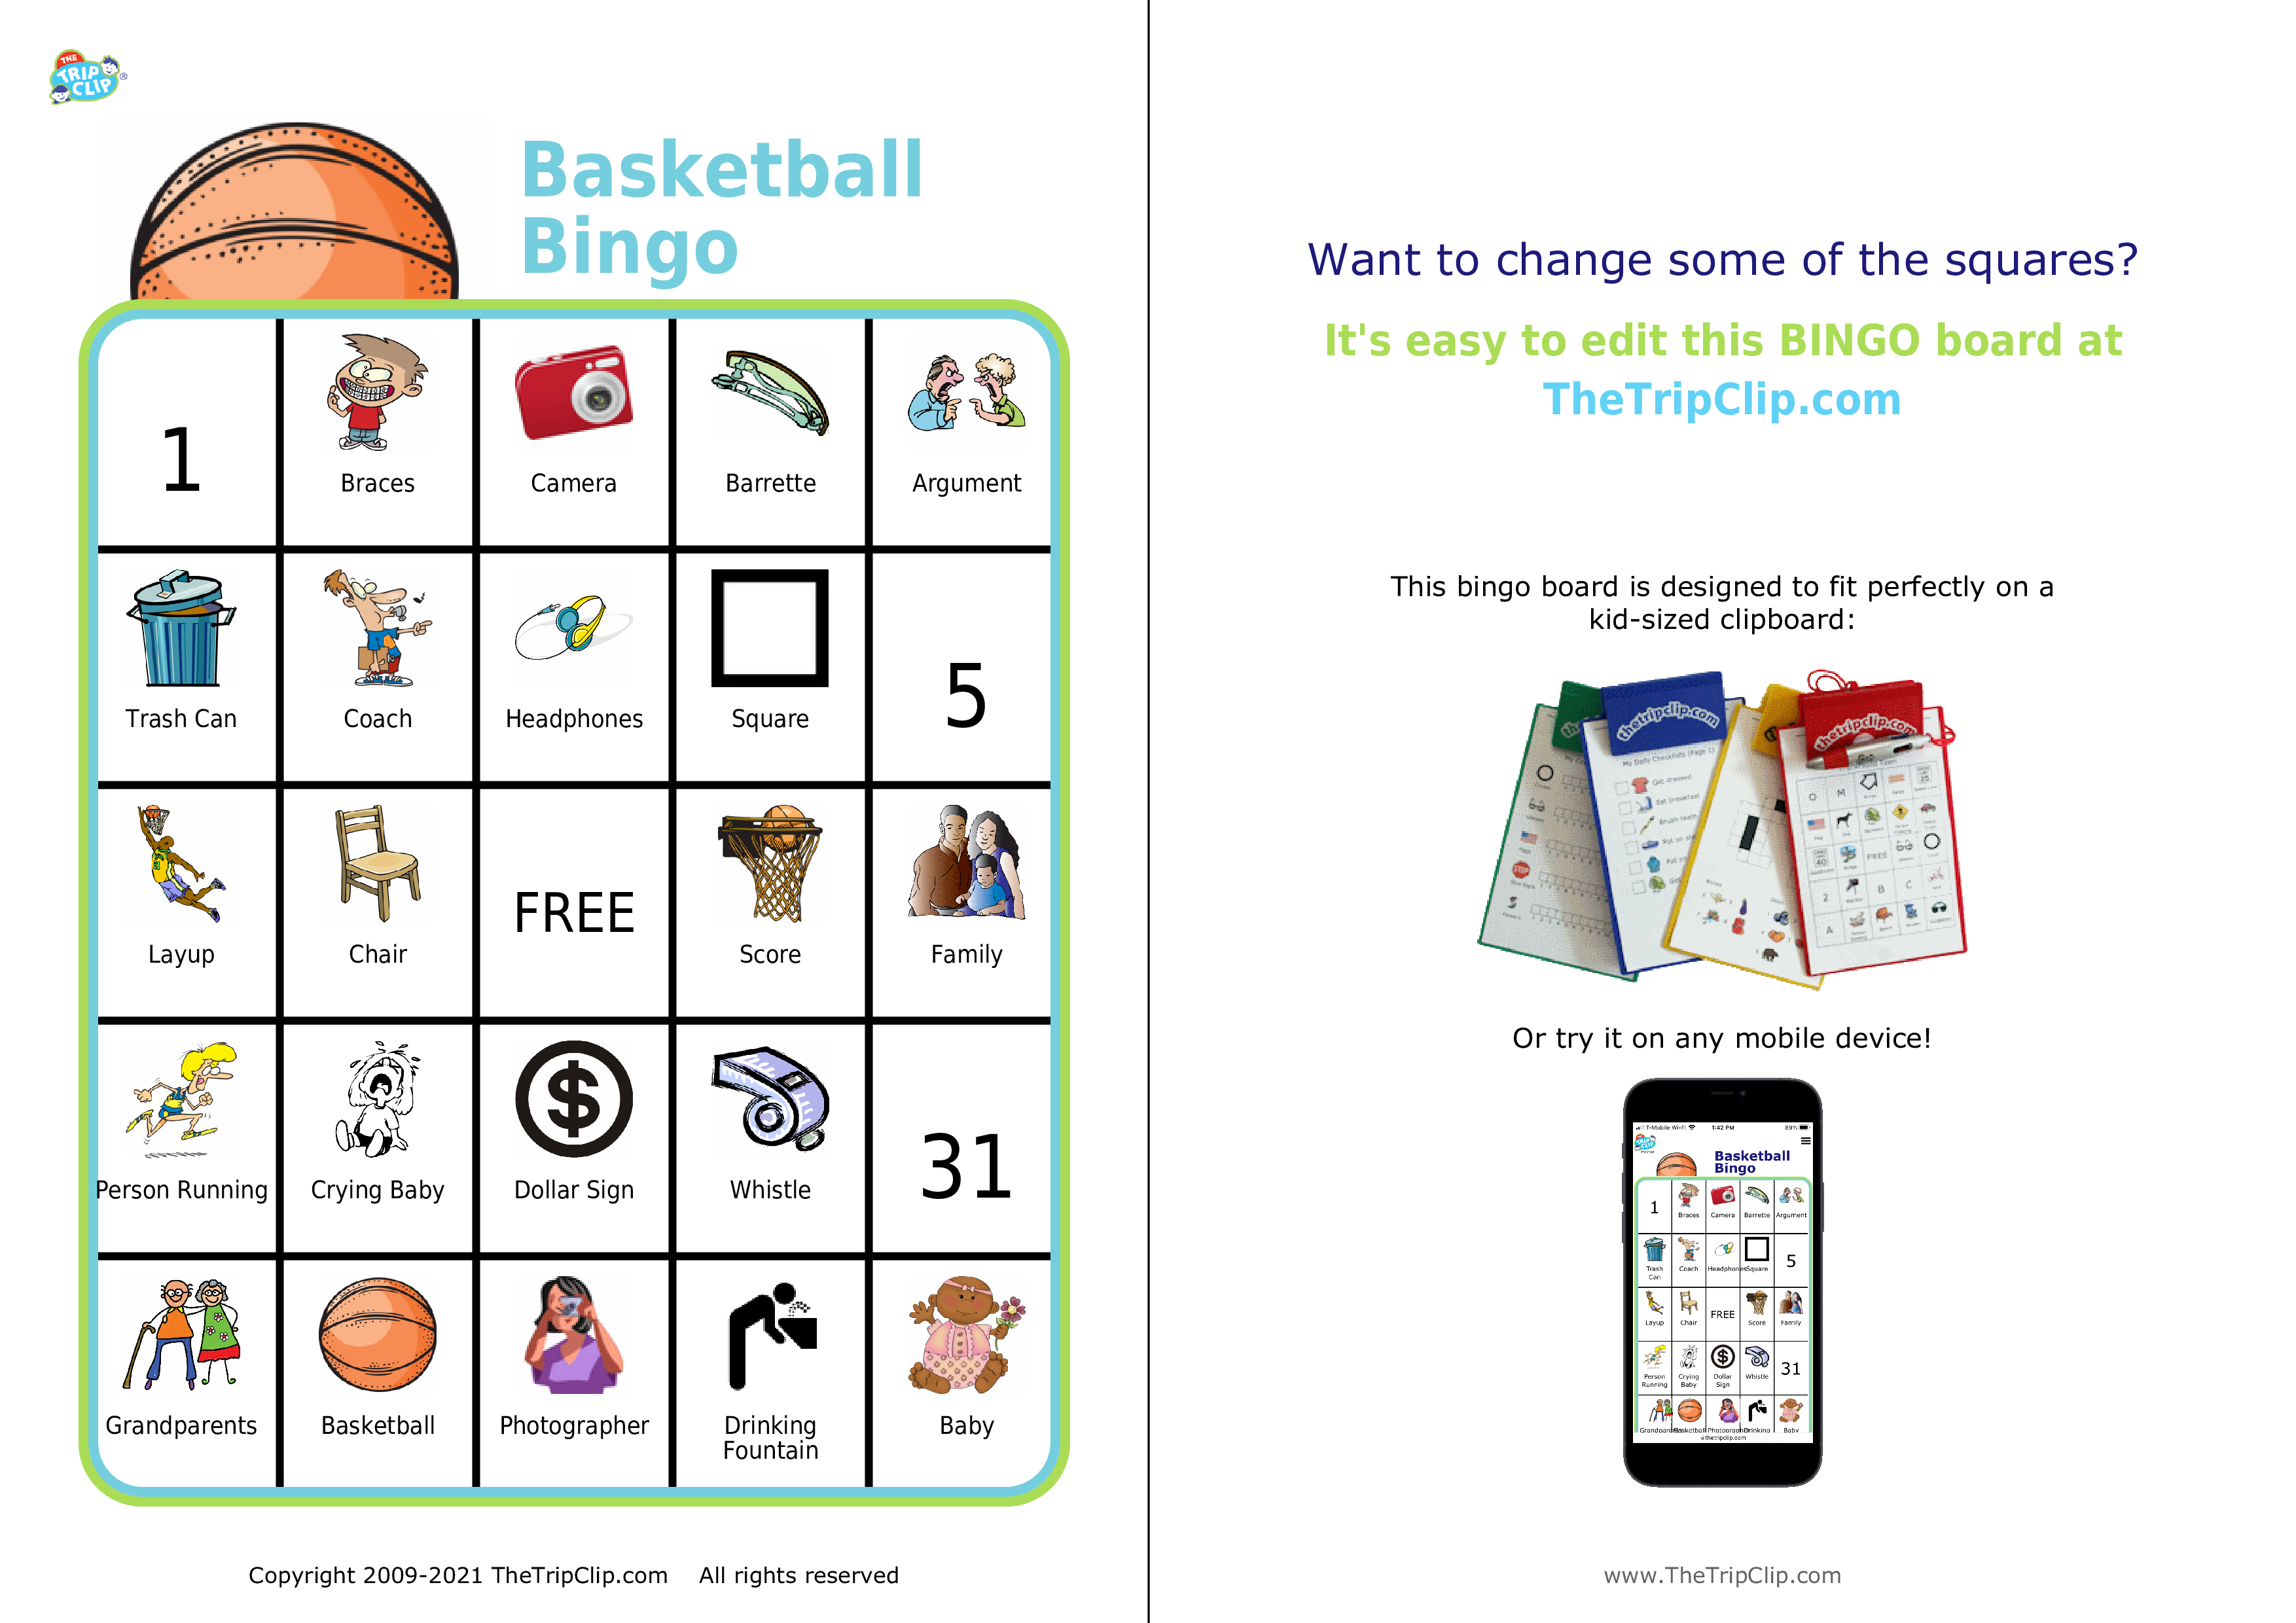 Bingo board with basketball at the top and titled Basketball Bingo